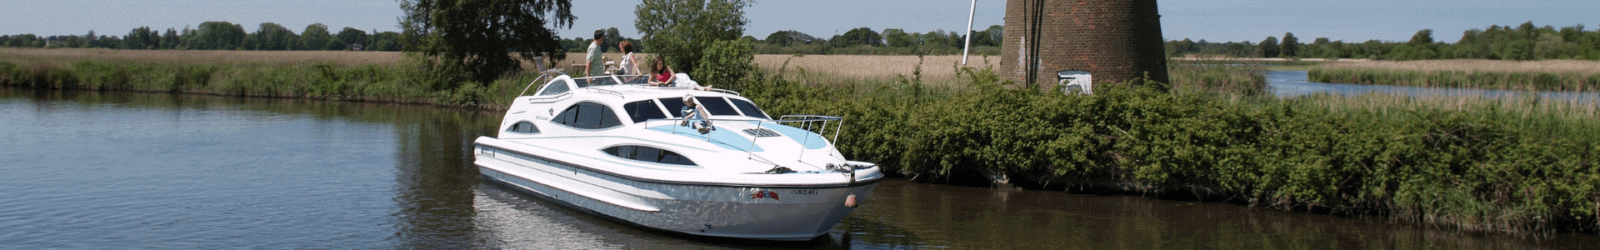 Cheap Norfolk Broads Hire Boats from Barnes Brinkcraft Wroxham